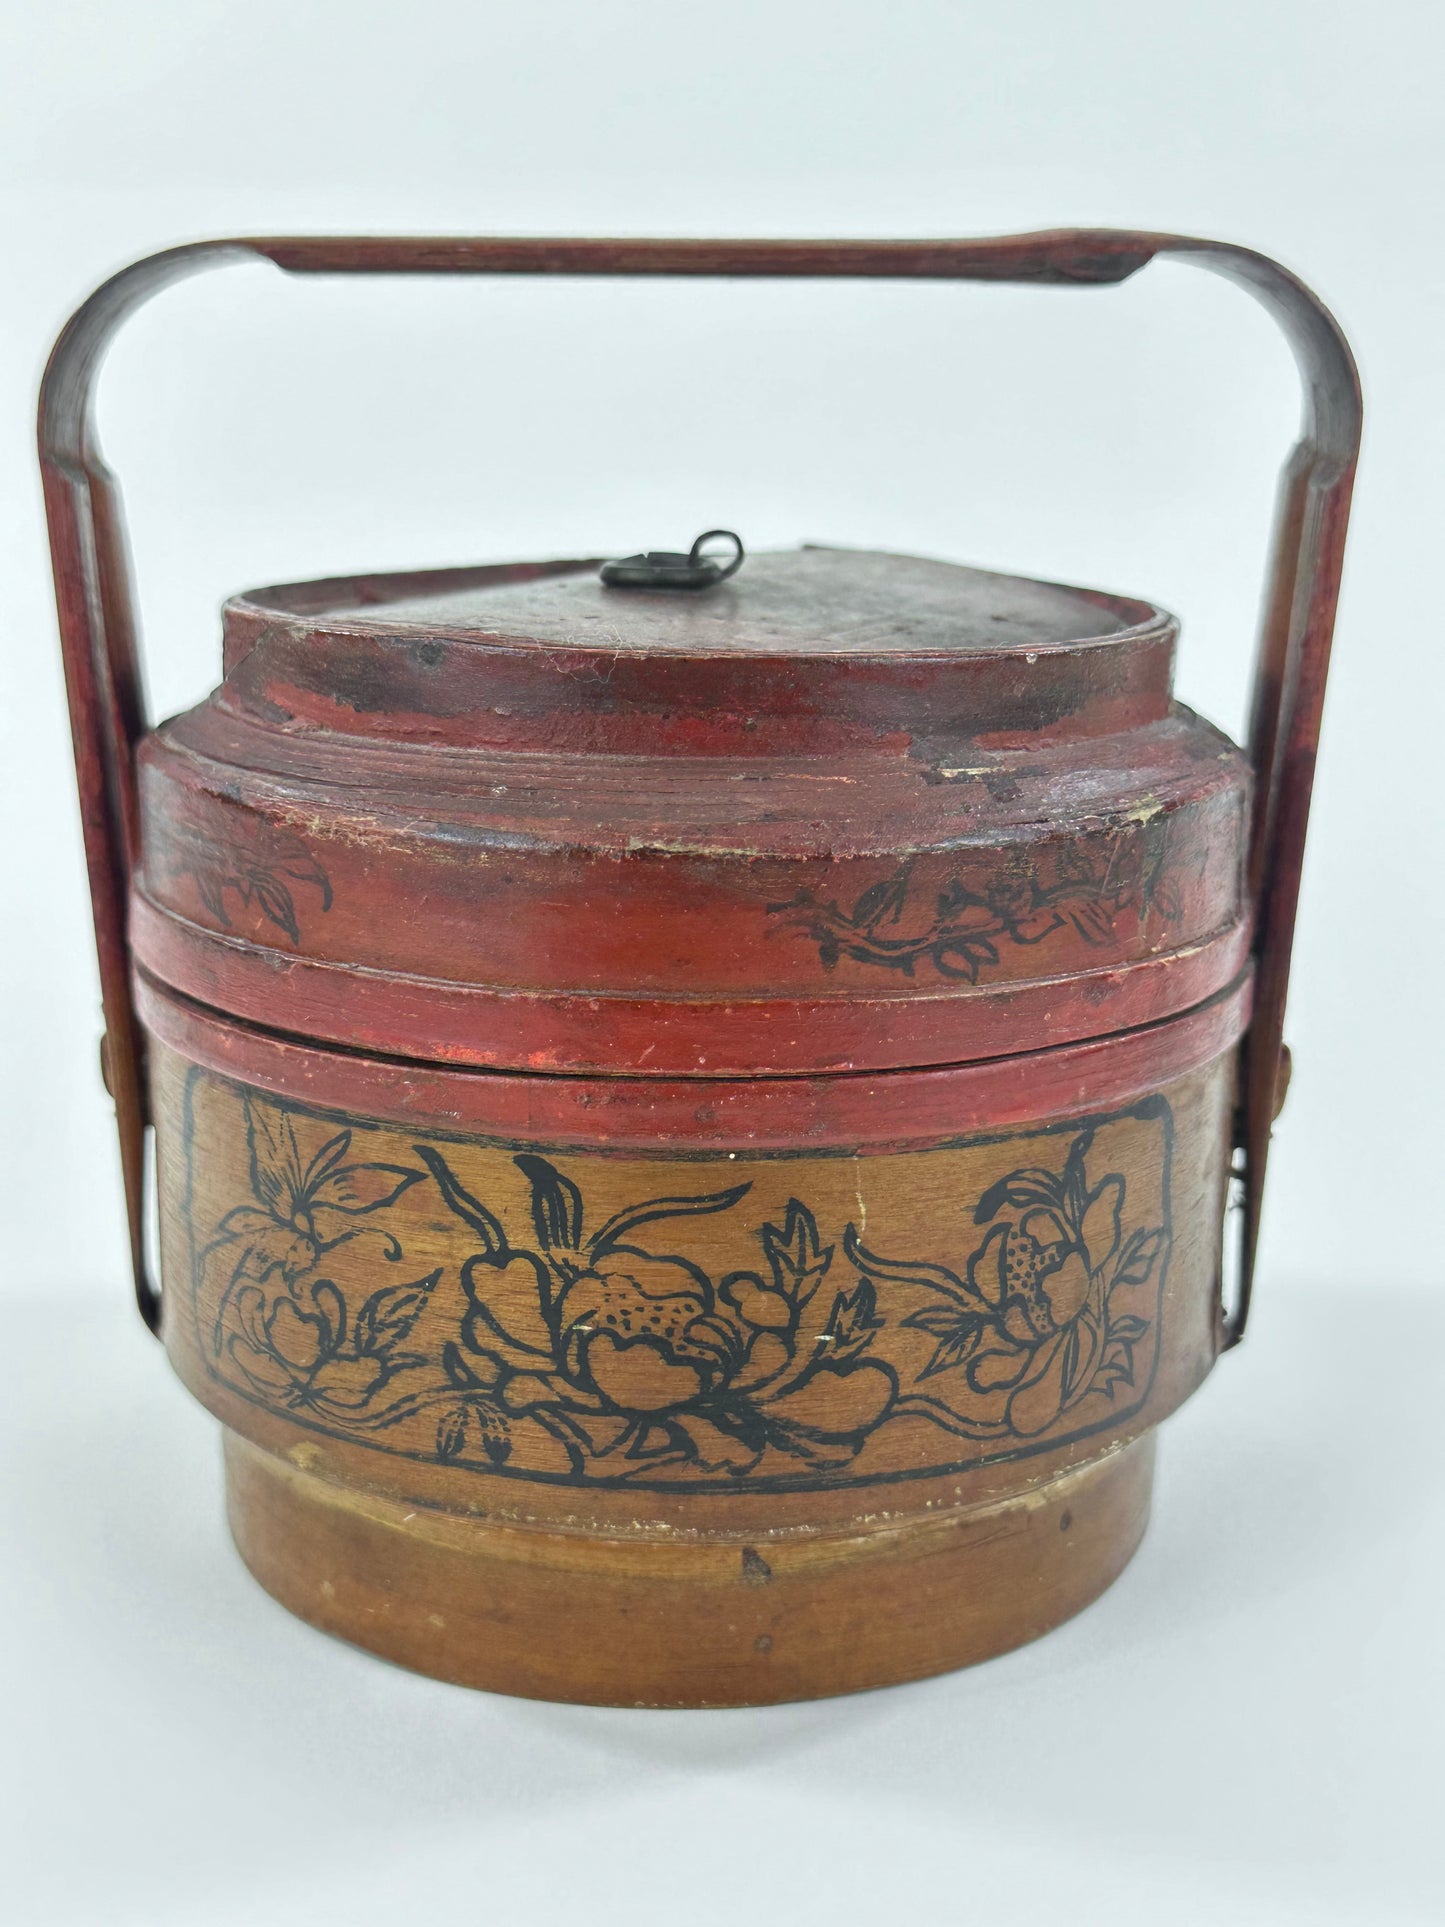 Vintage Chinese Miniature Wedding Lacquer Rattan Basket/Box 6"